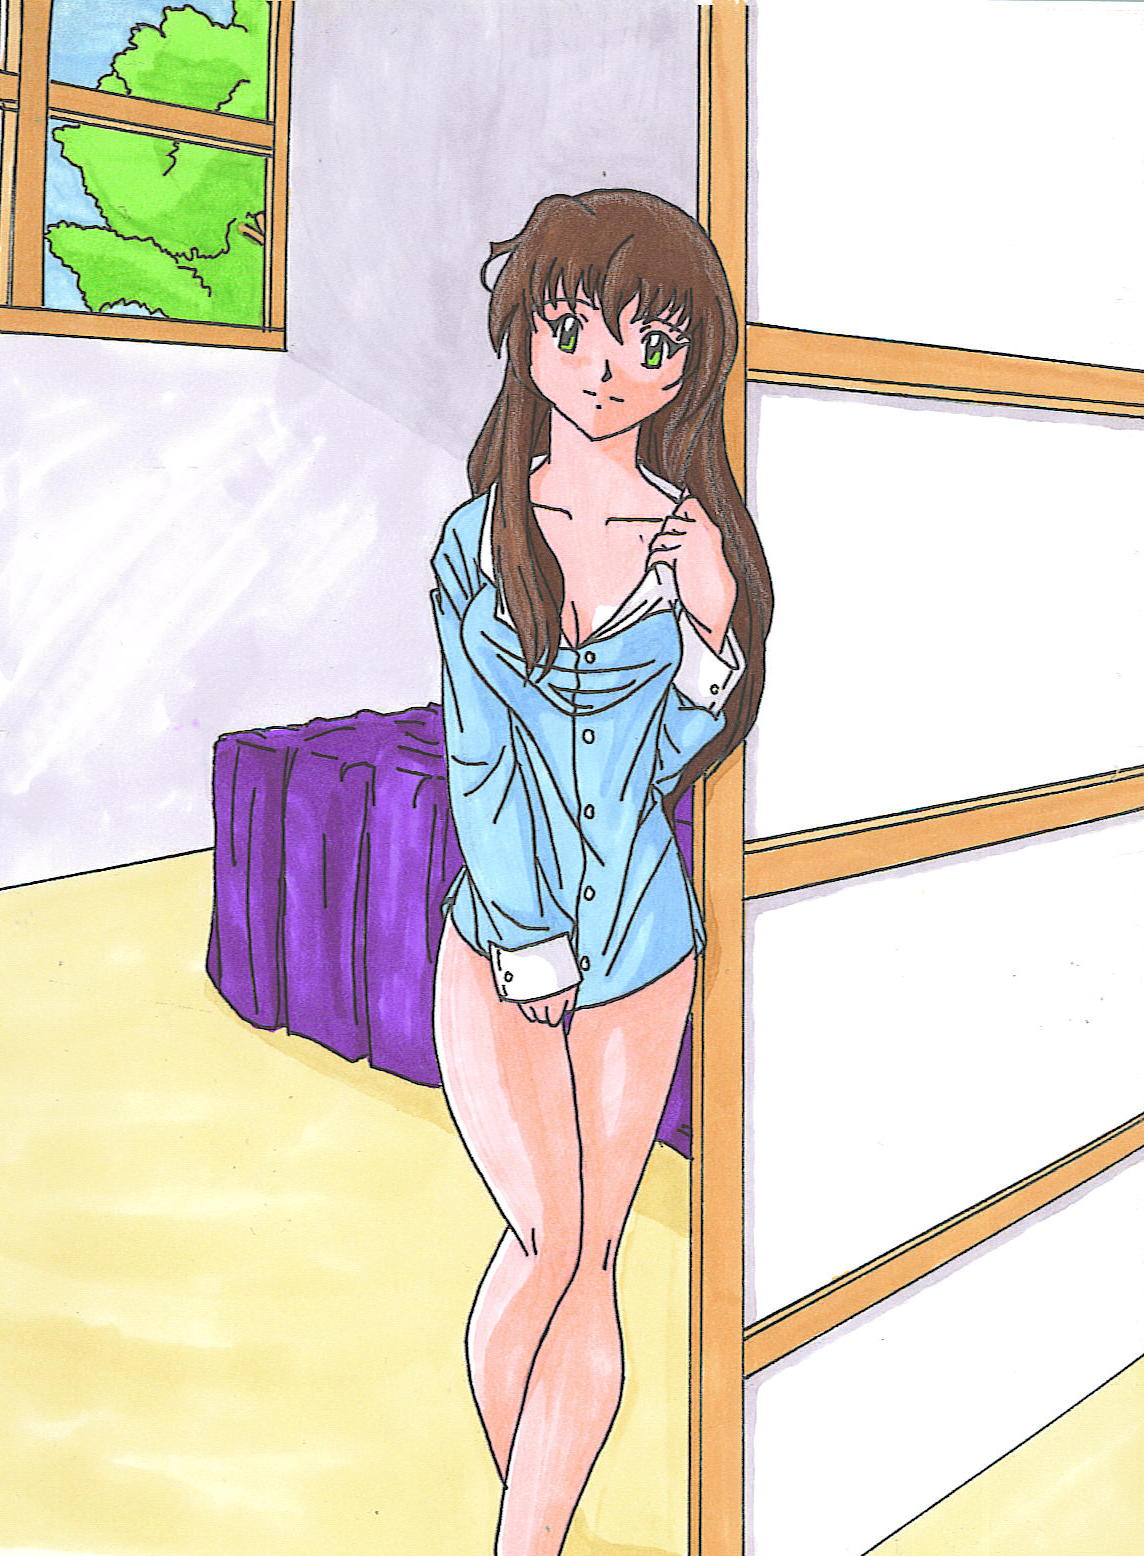 Good Morning -^_^- by AnimeMangaLover